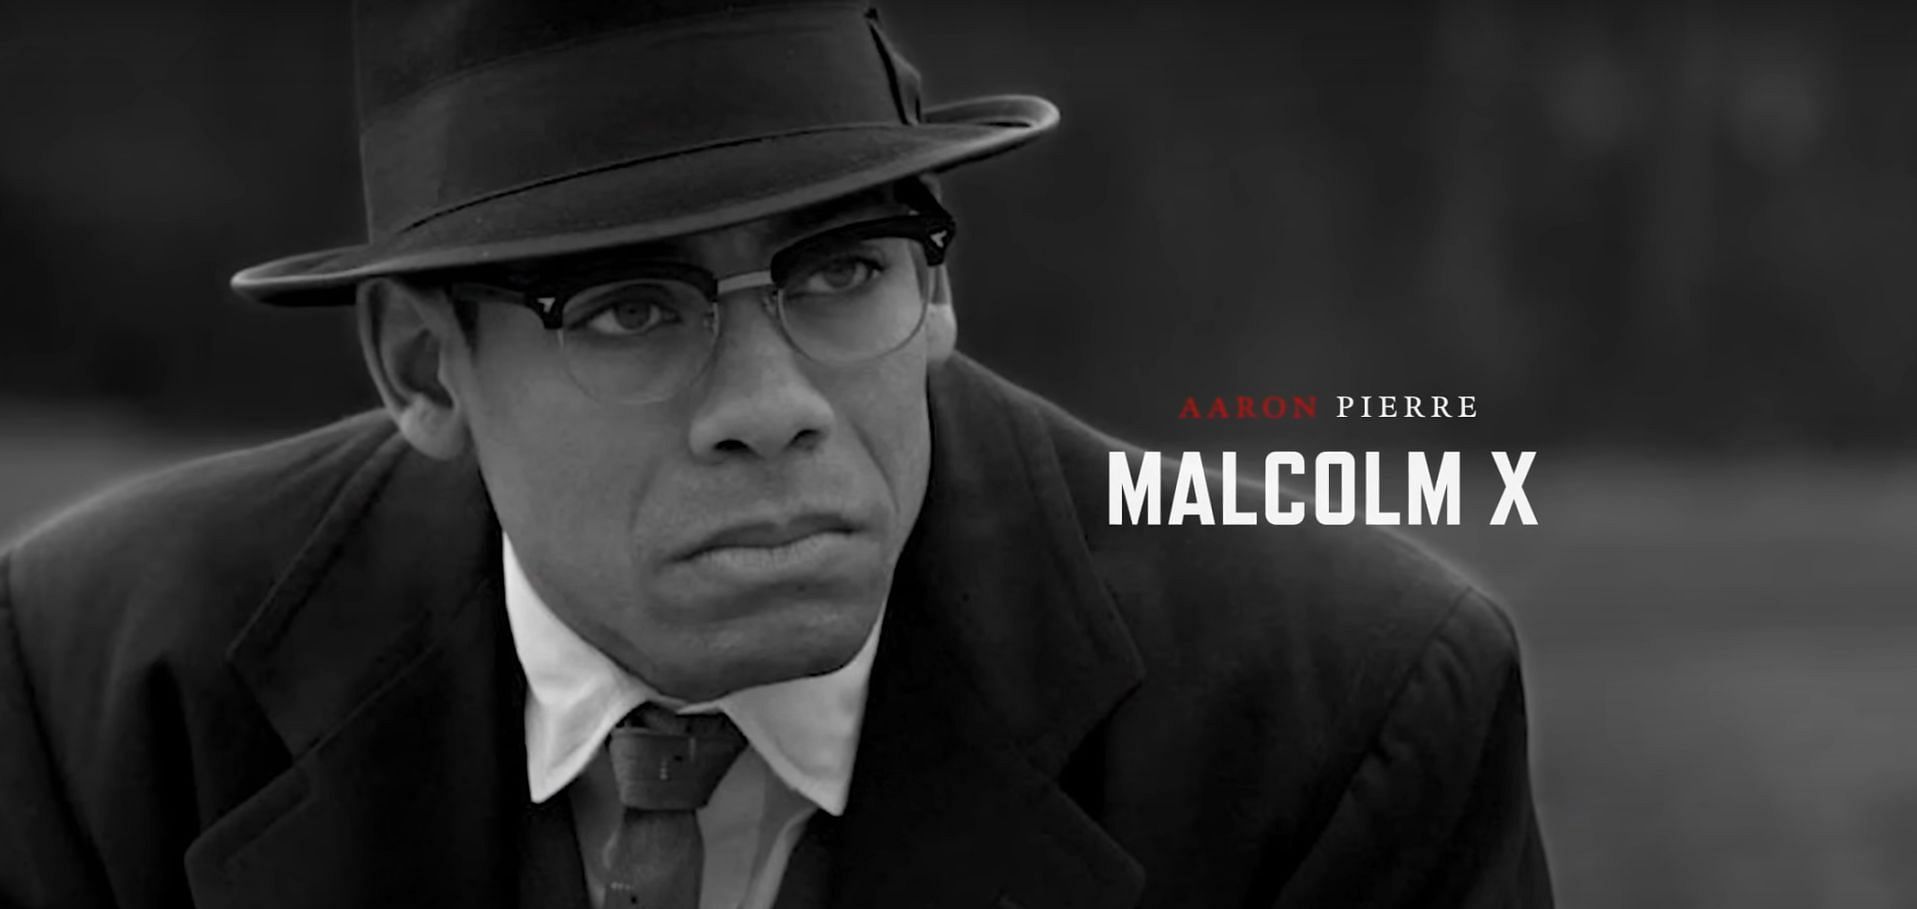 Aaron Pierre as Malcolm X (Image via National Geographic, Genius: MLK/X, 1:42)